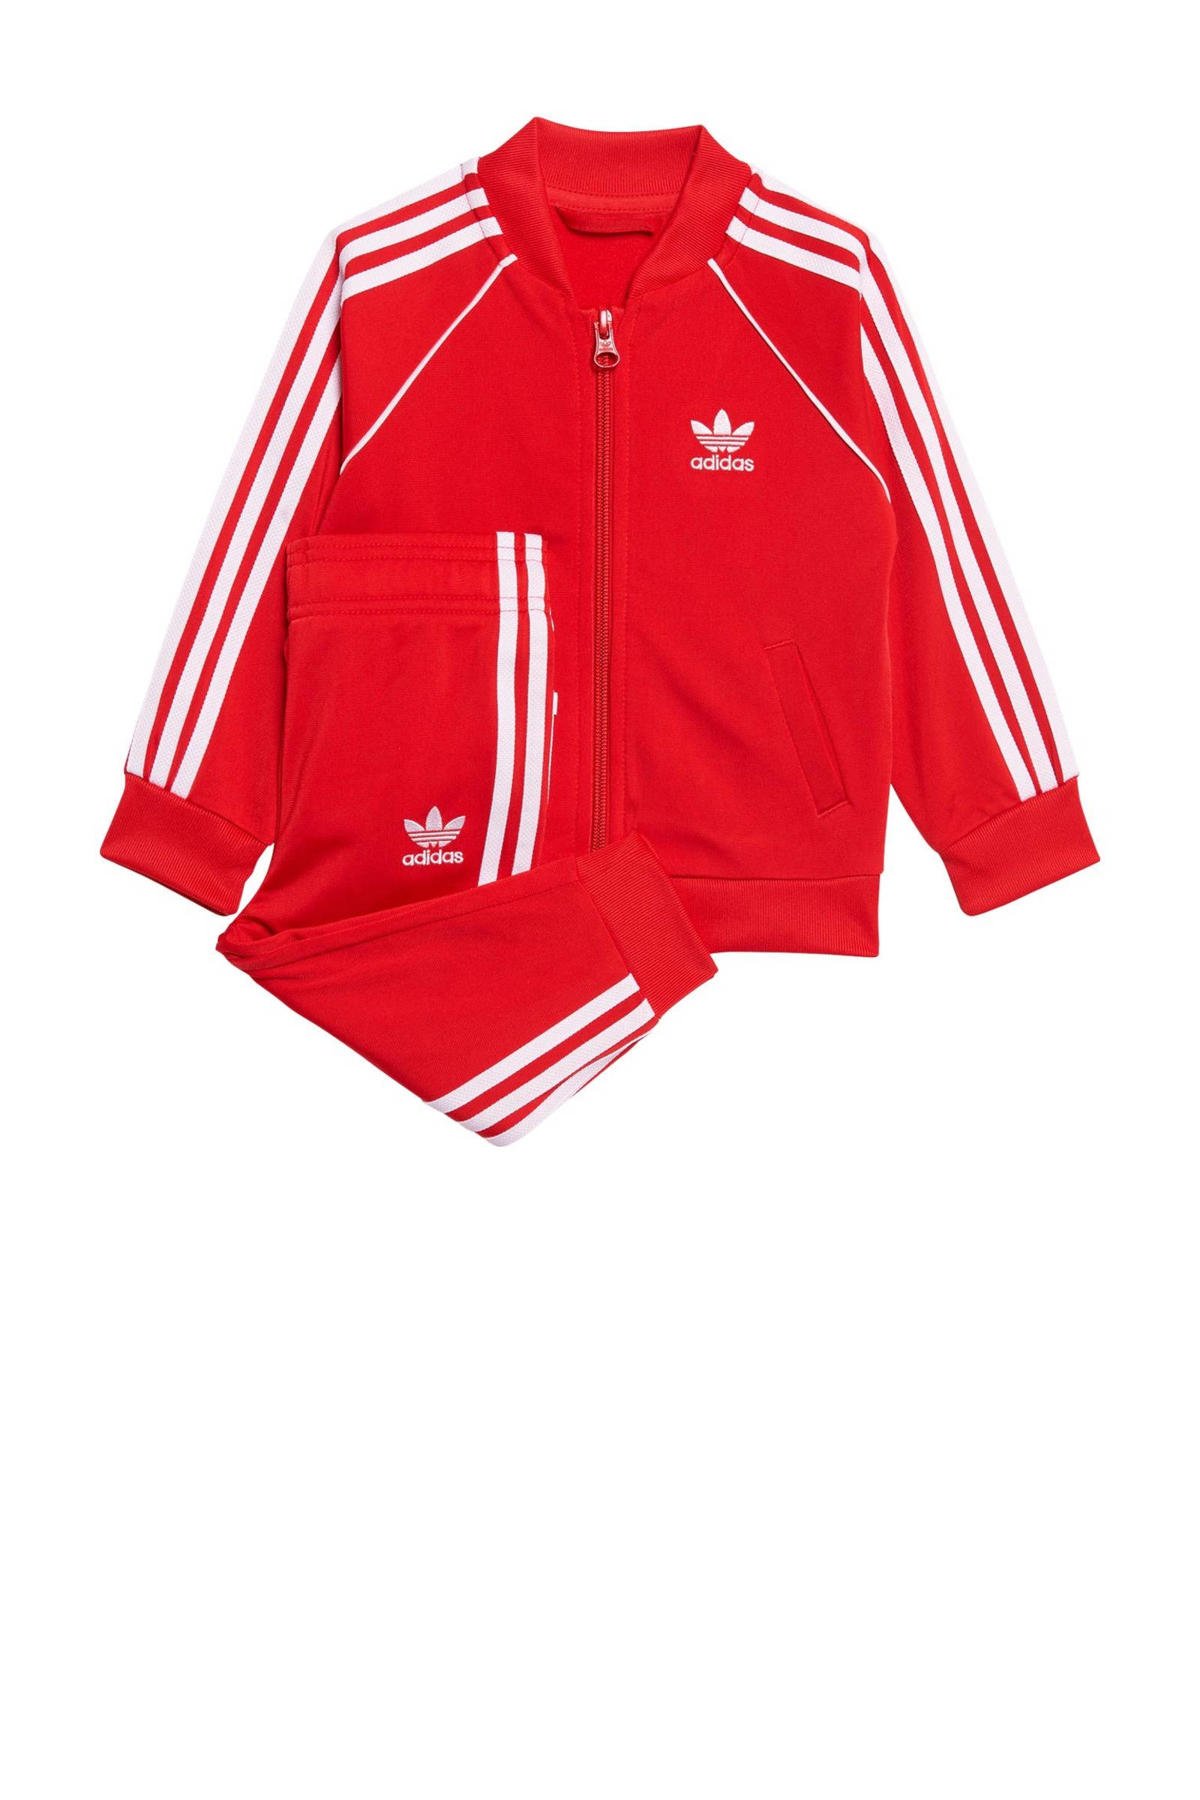 klimaat Trappenhuis Draaien adidas Originals Superstar Adicolor baby trainingspak rood/wit | wehkamp